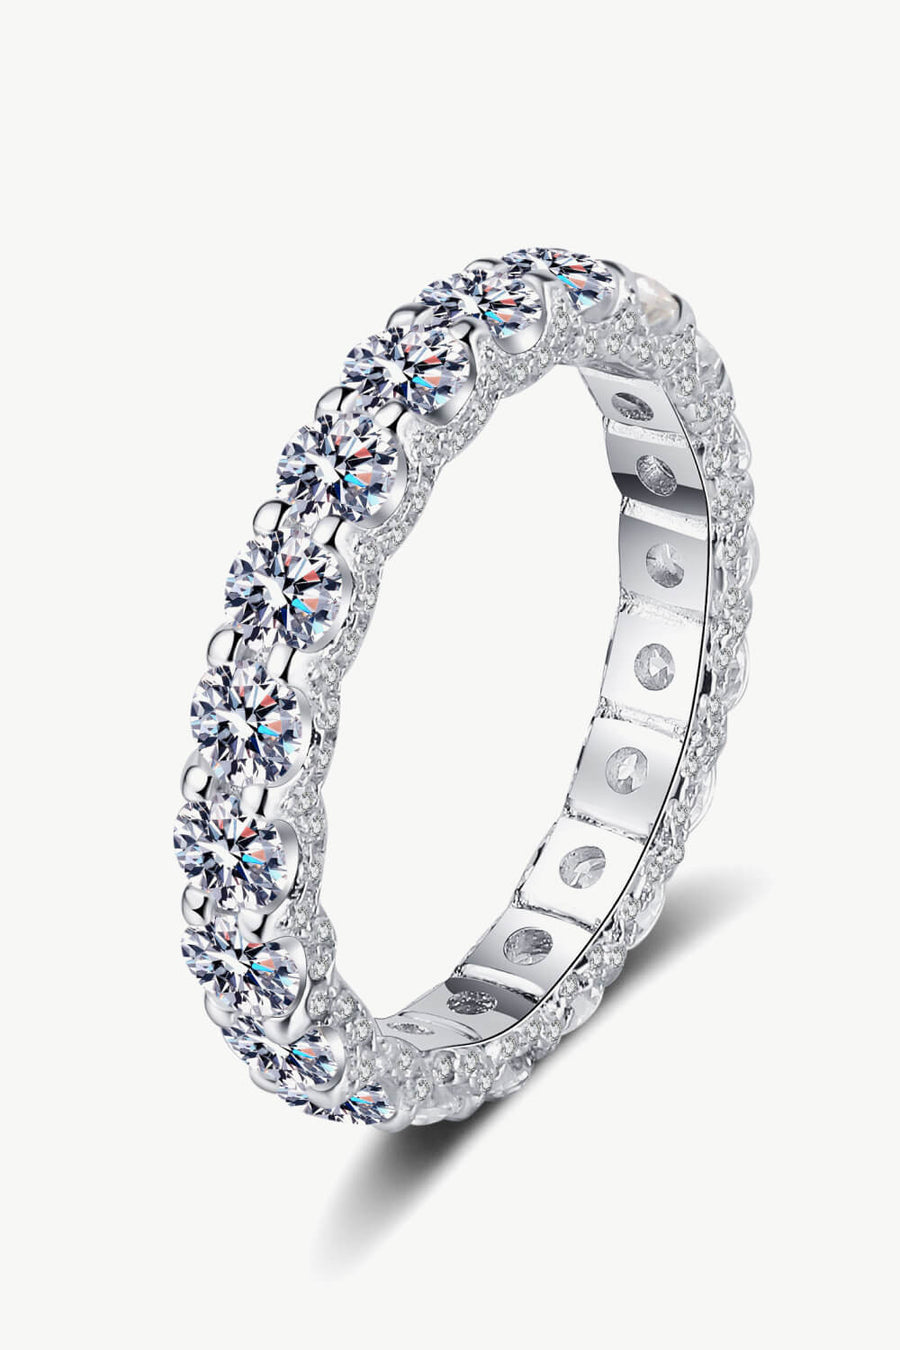 Best Diamond Ring Jewelry Gifts for Women | 2.1 Carat Diamond Band Ring | MASON New York